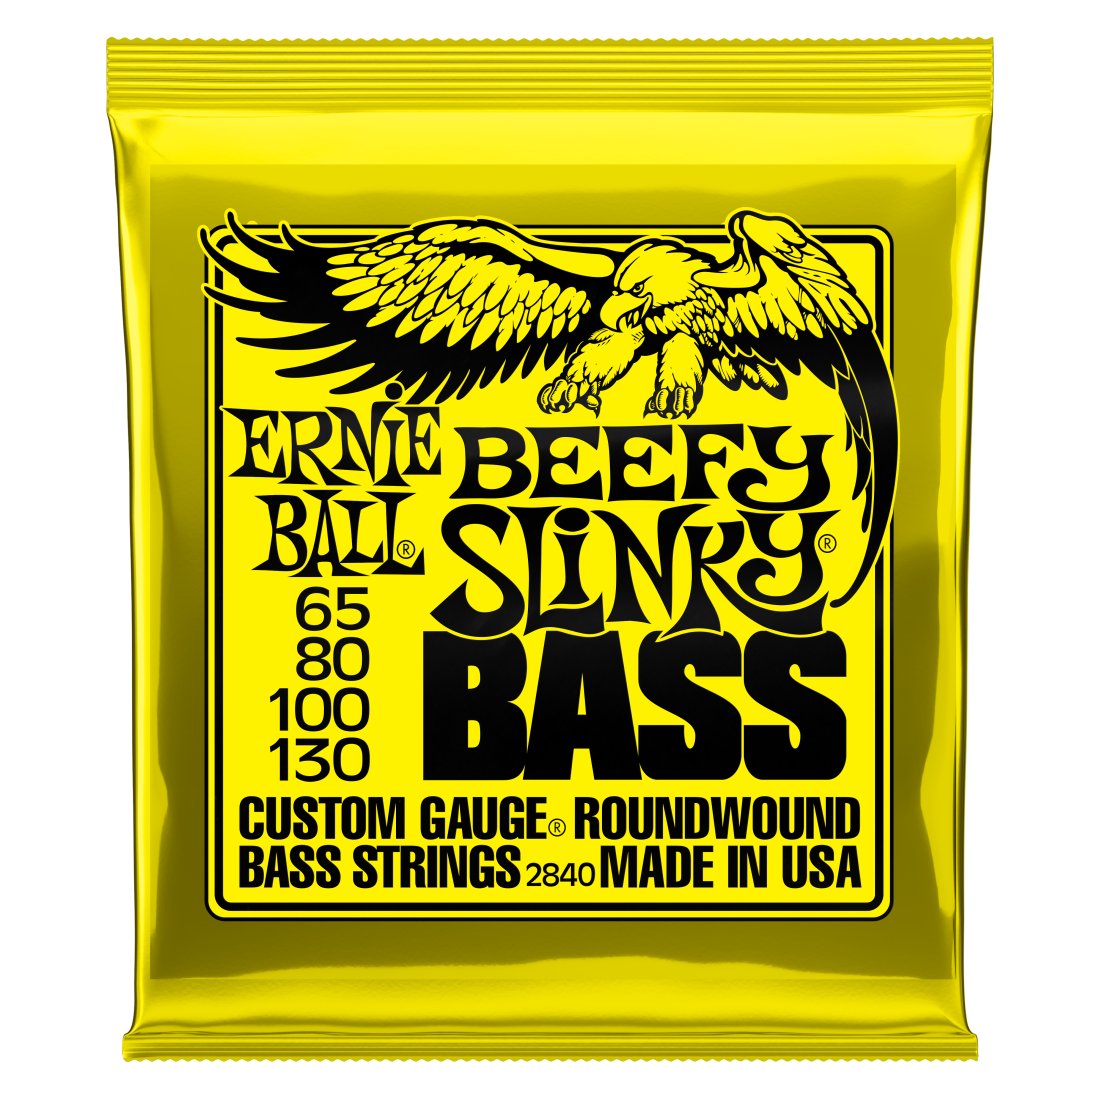 Beefy Slinky 65-130 Bass Strings